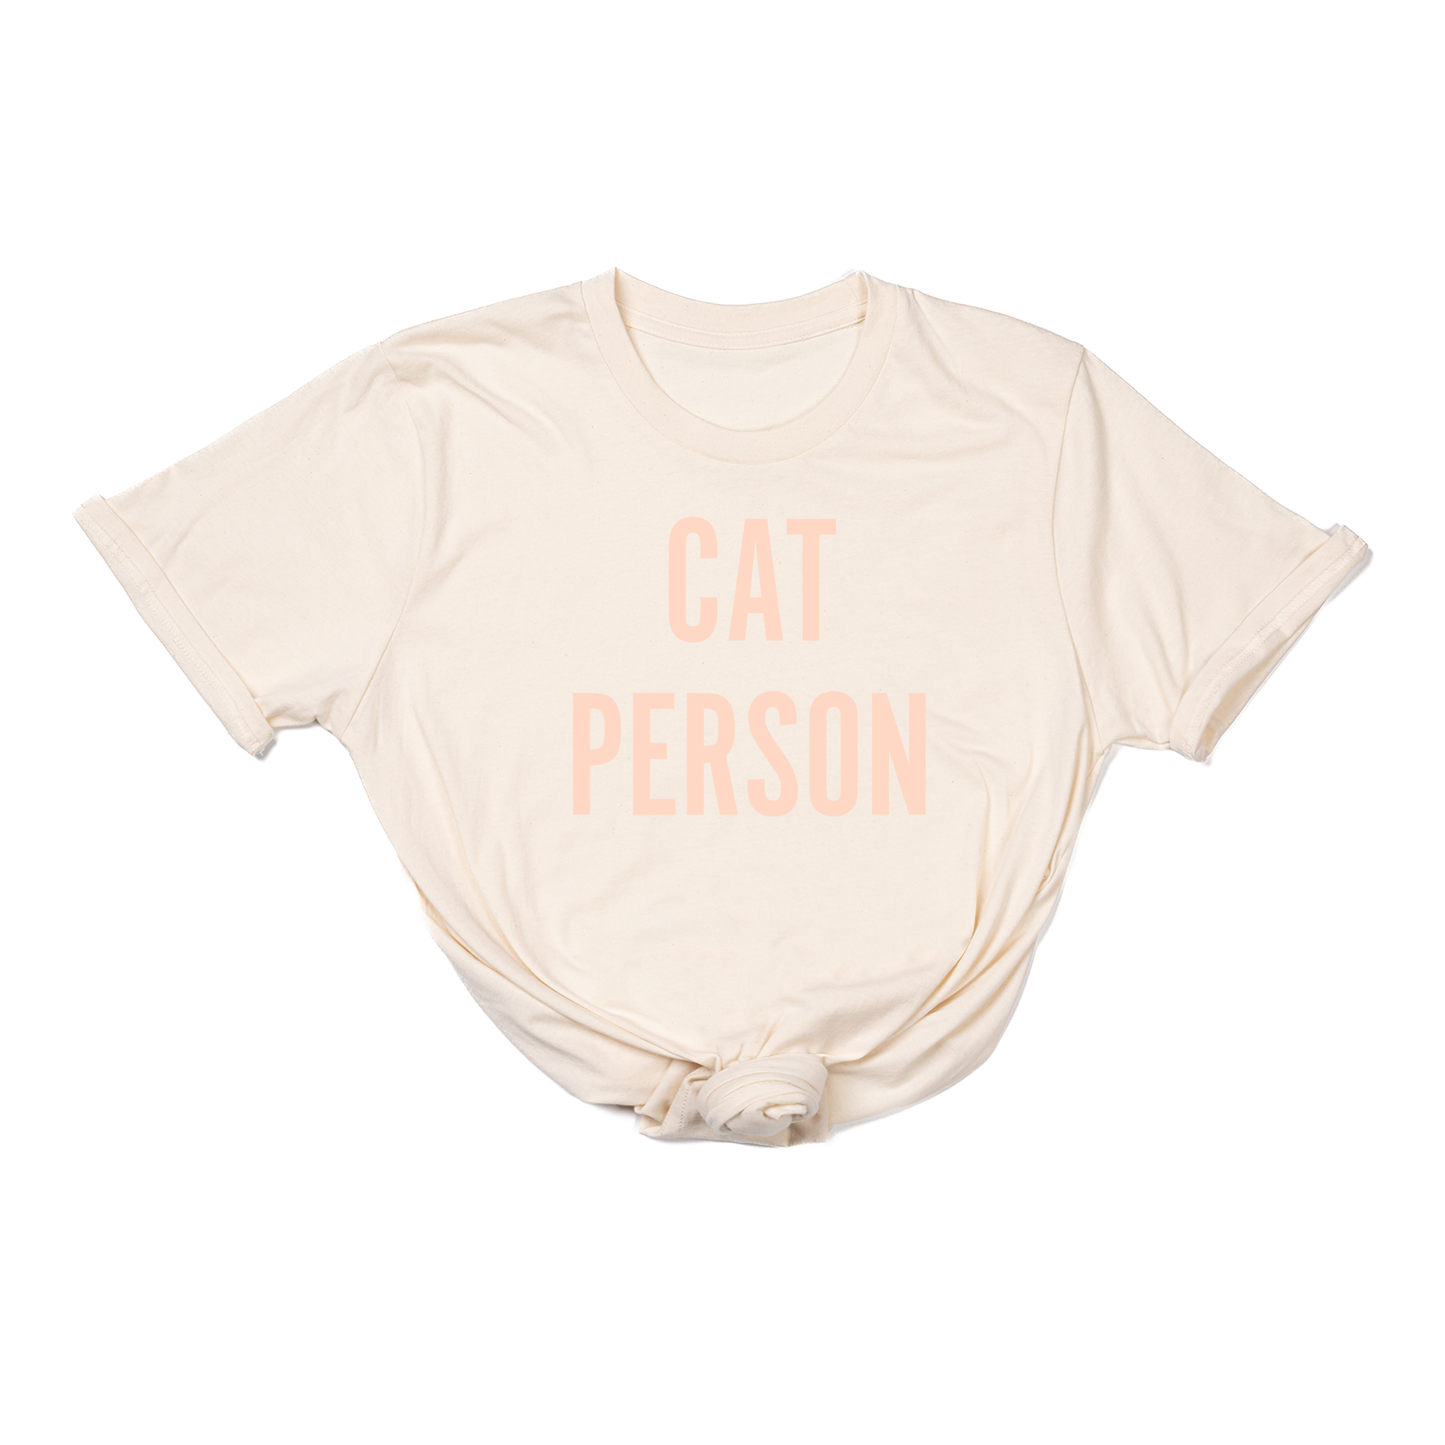 Cat Person (Peach) - Tee (Natural)